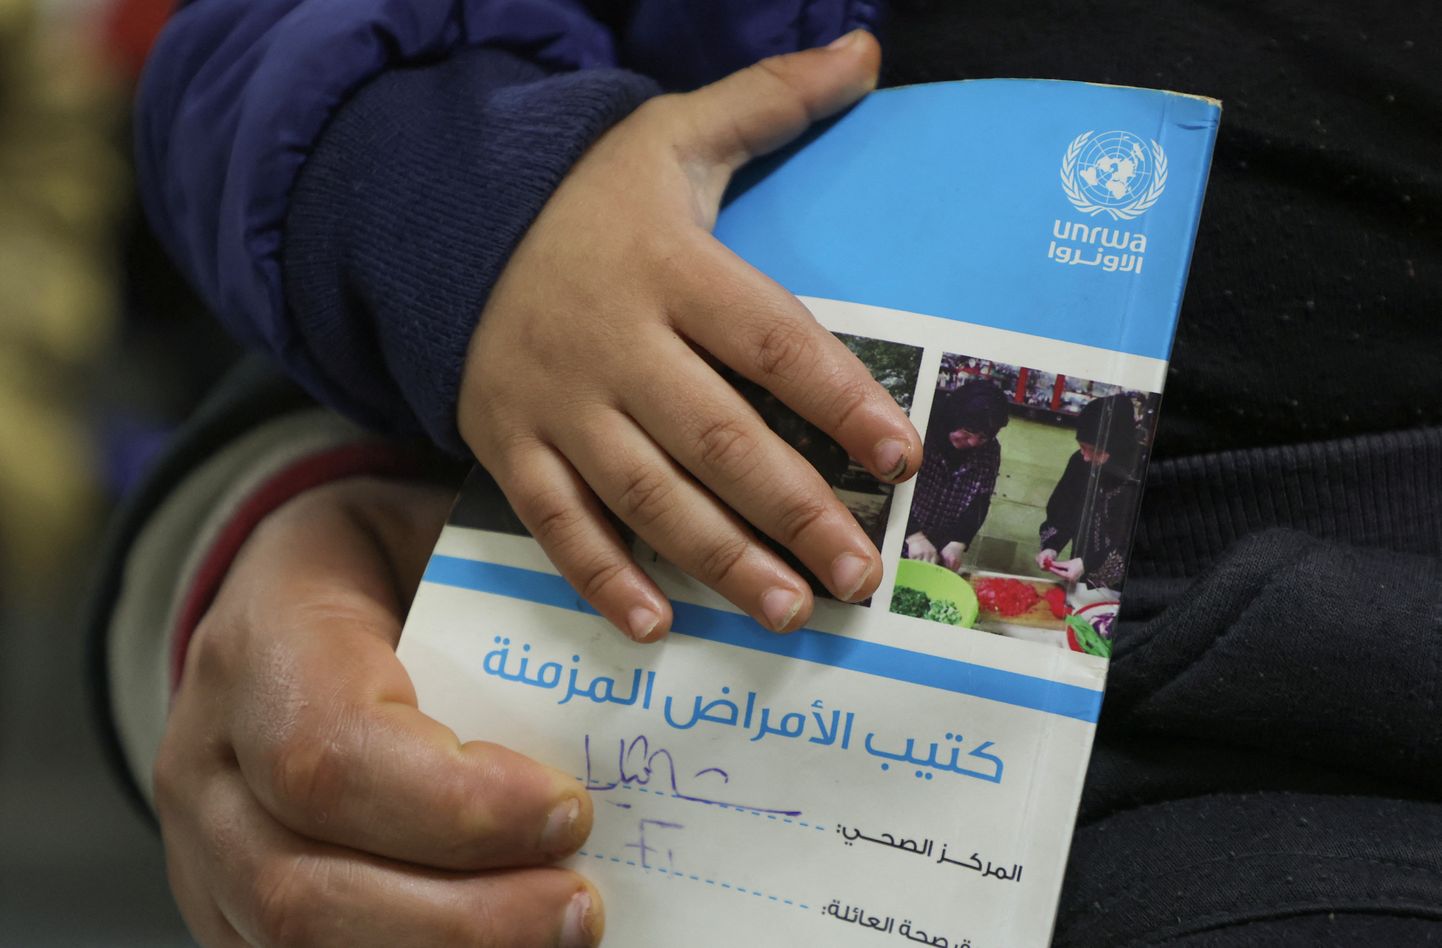 UNRWA logoga teabeleht.